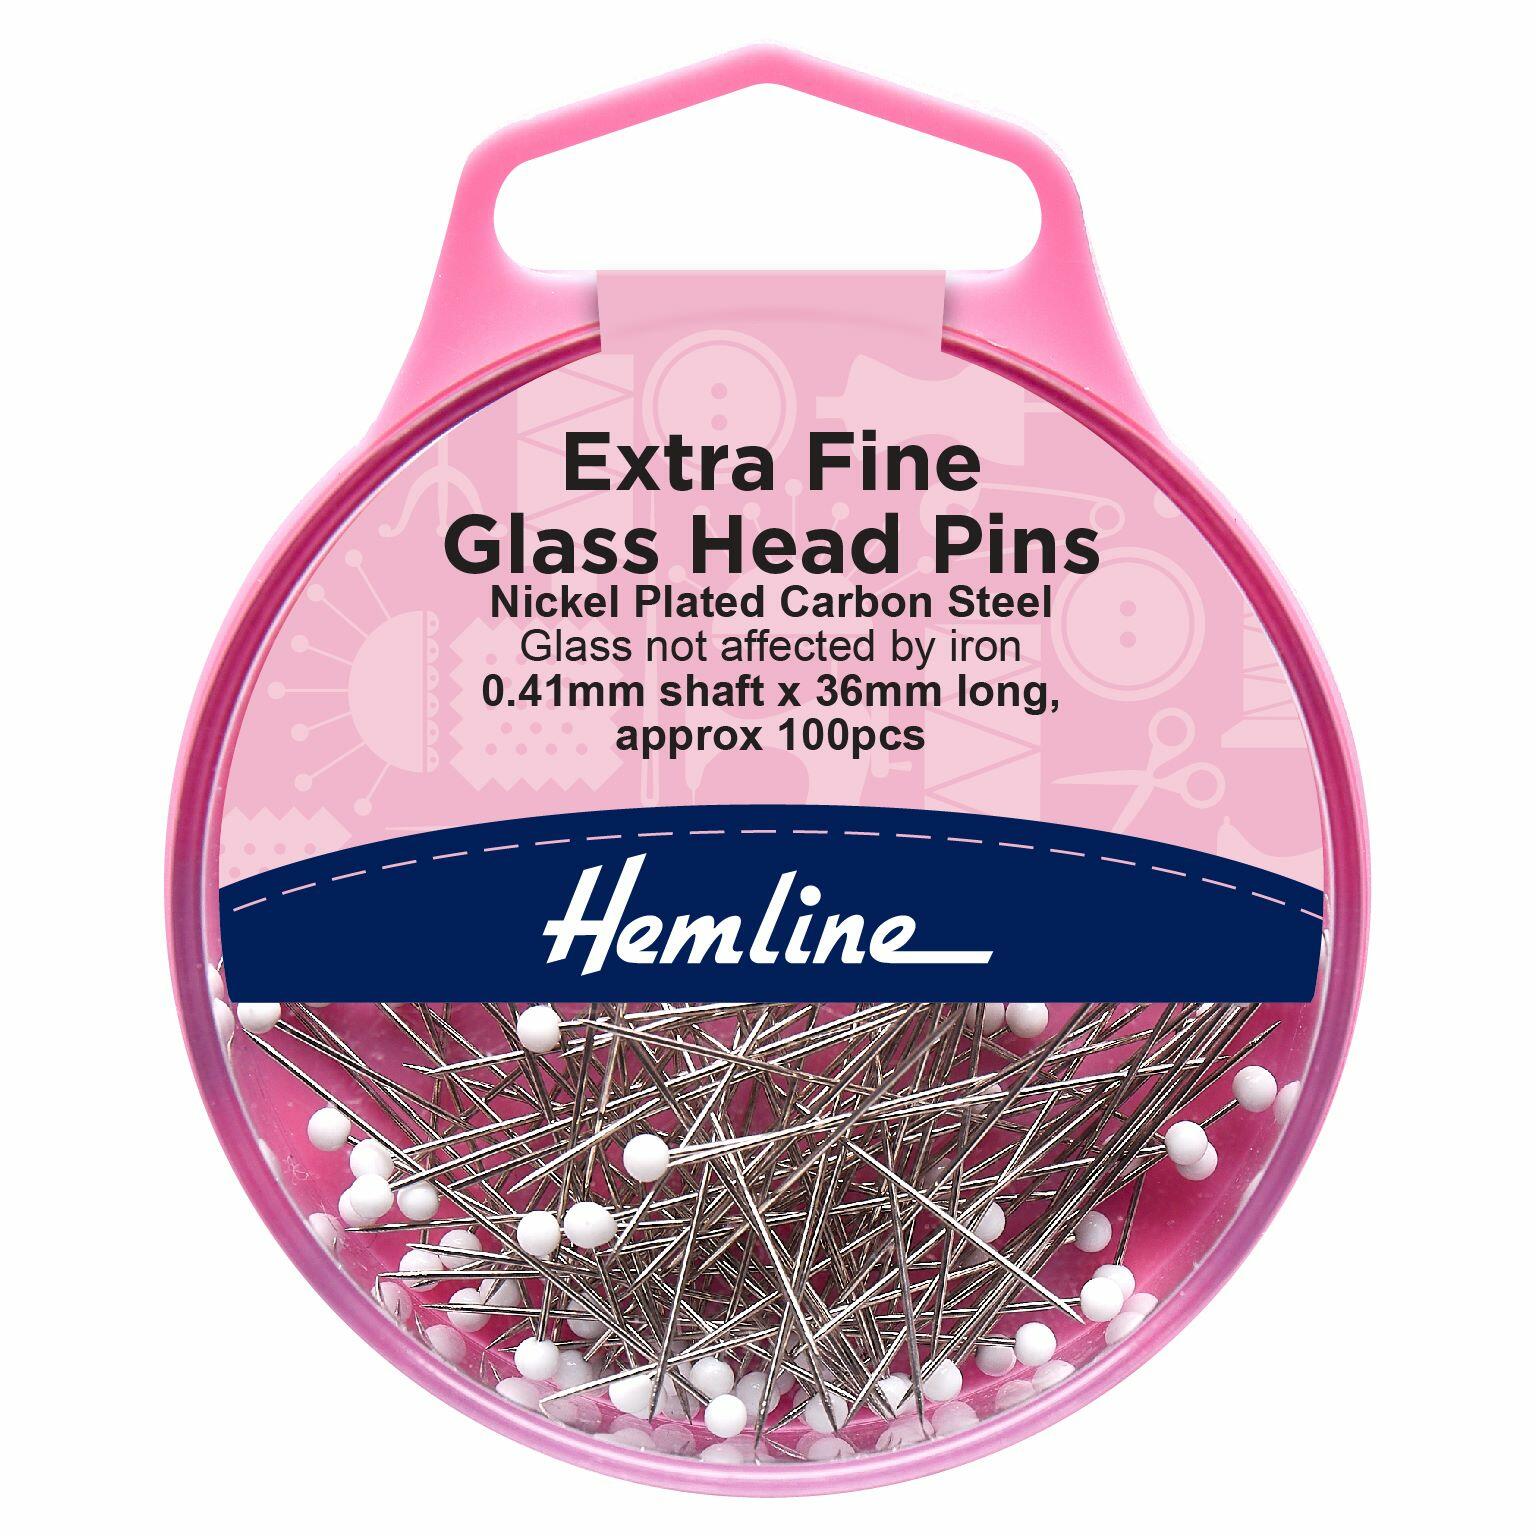 Pink Hemline storage pot containing White glass head pins